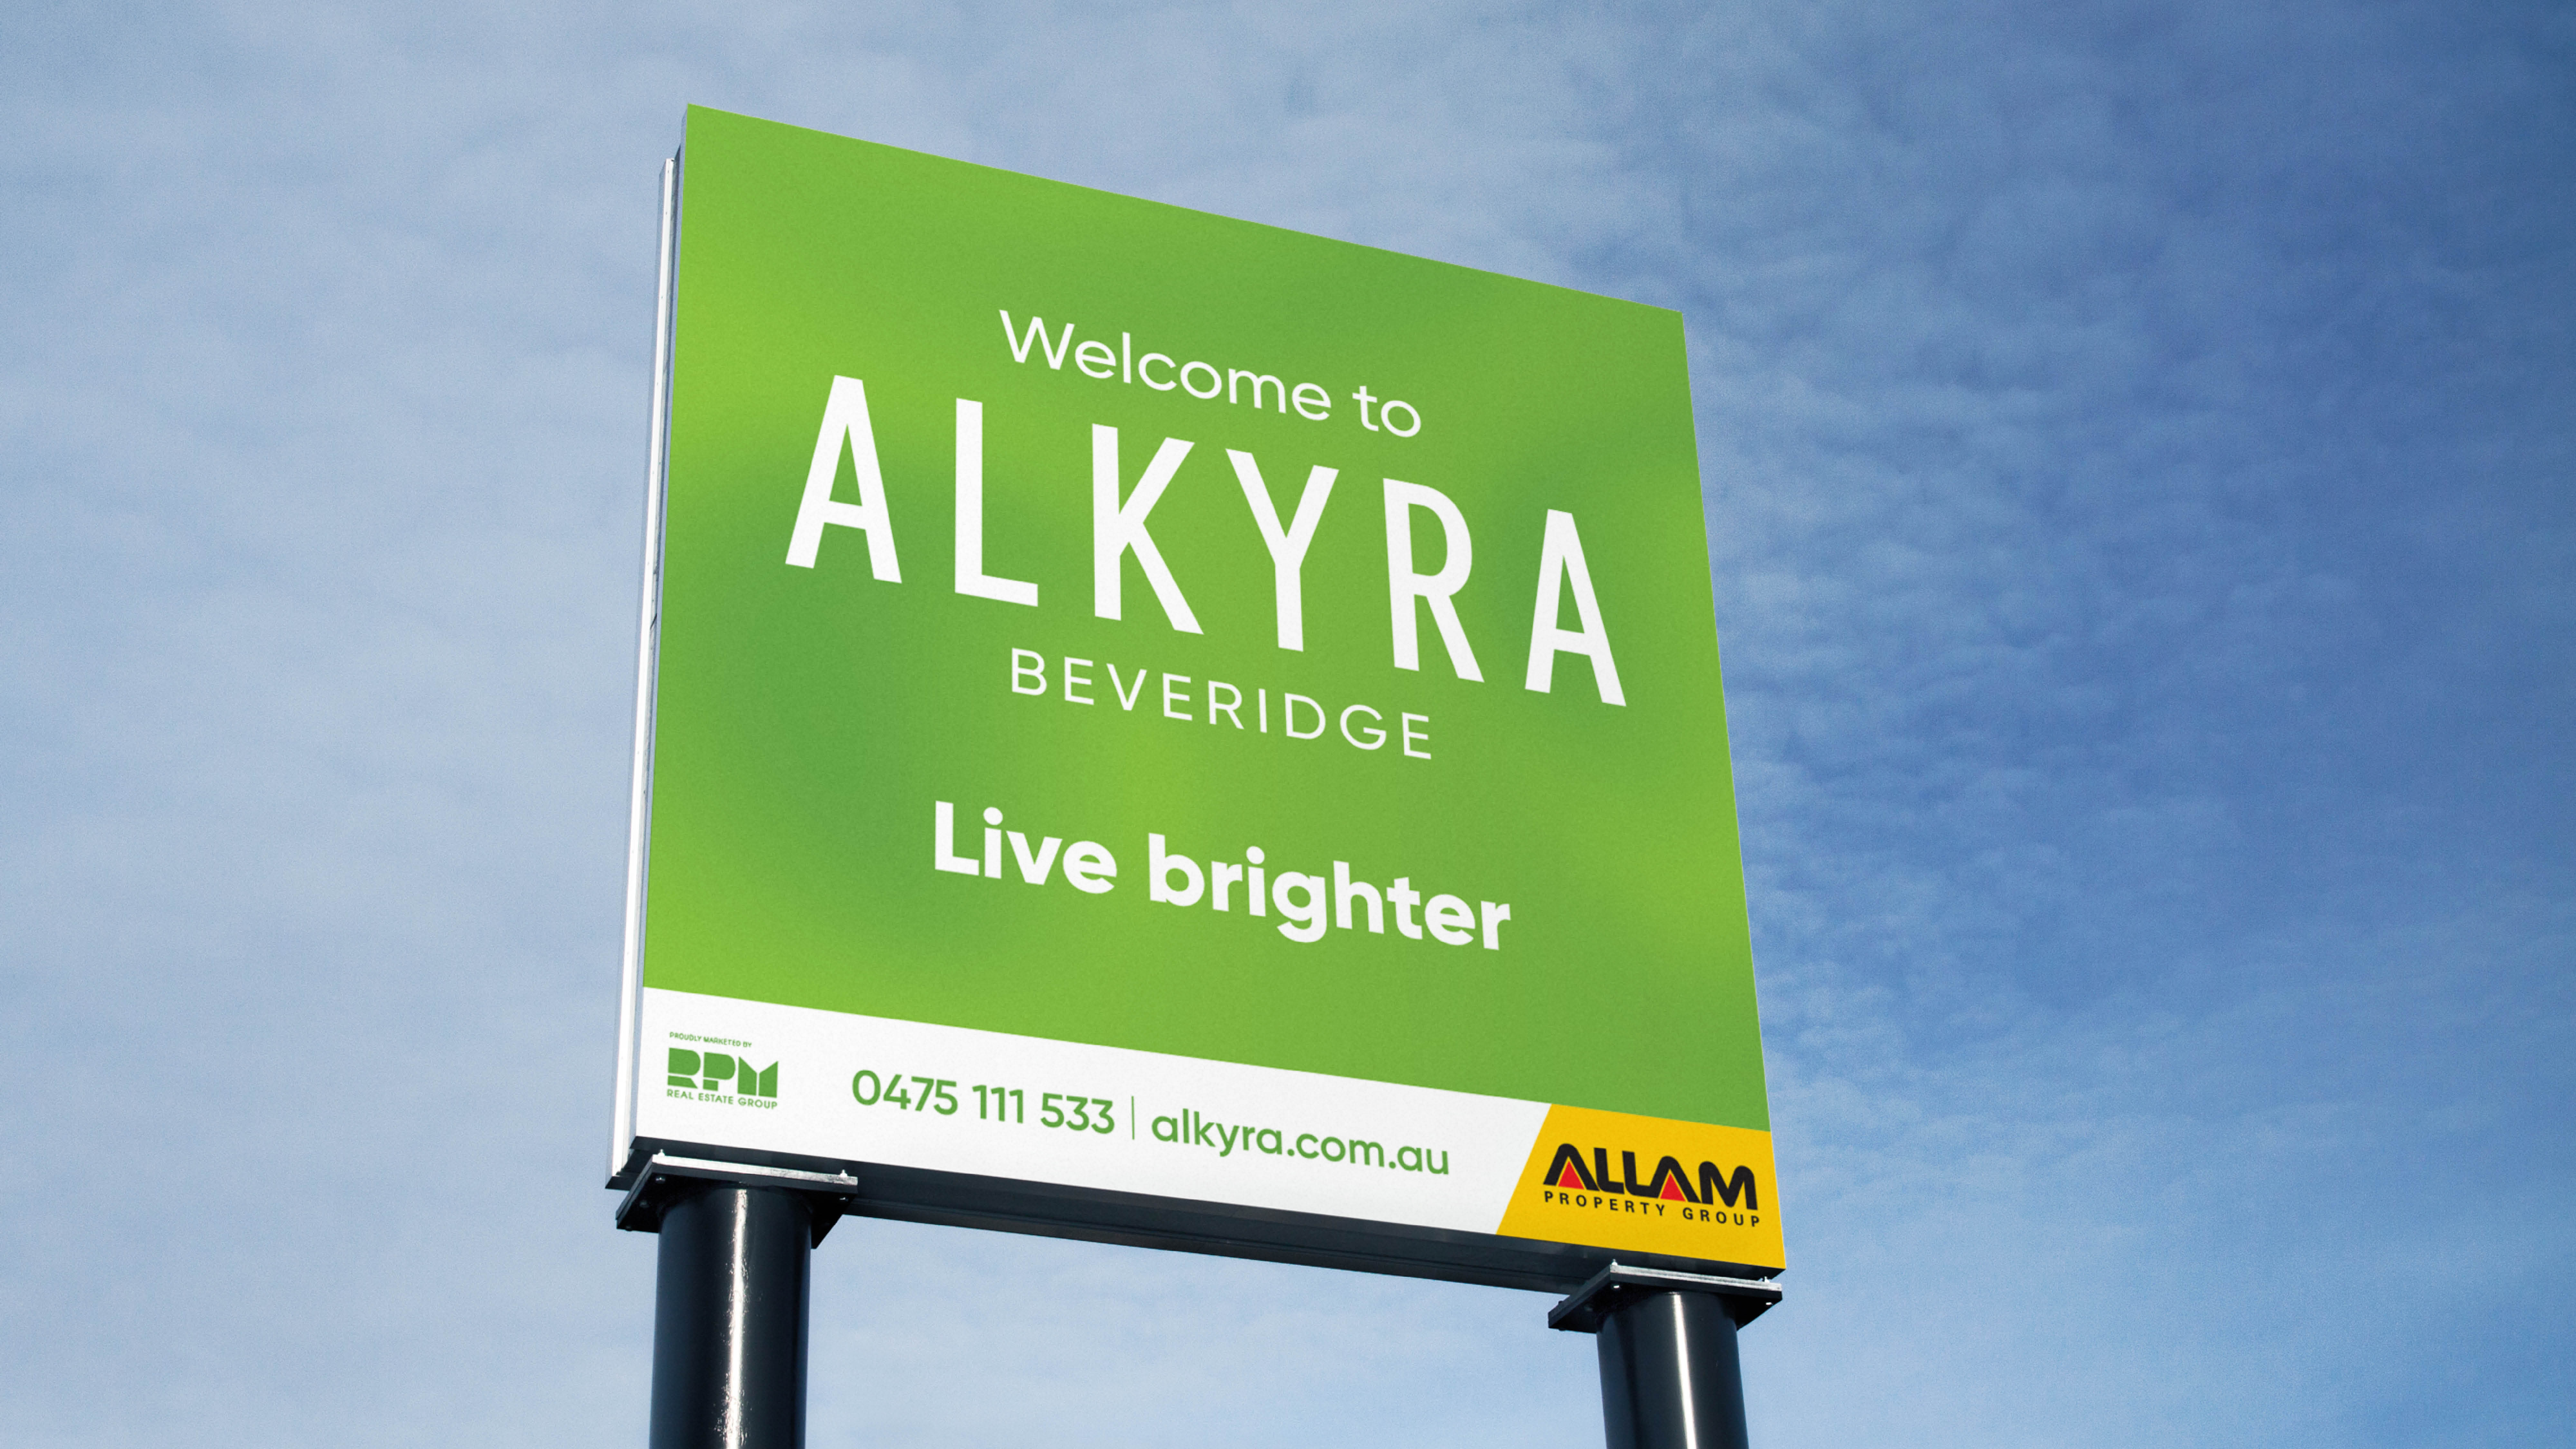 Alkyra – Beveridge